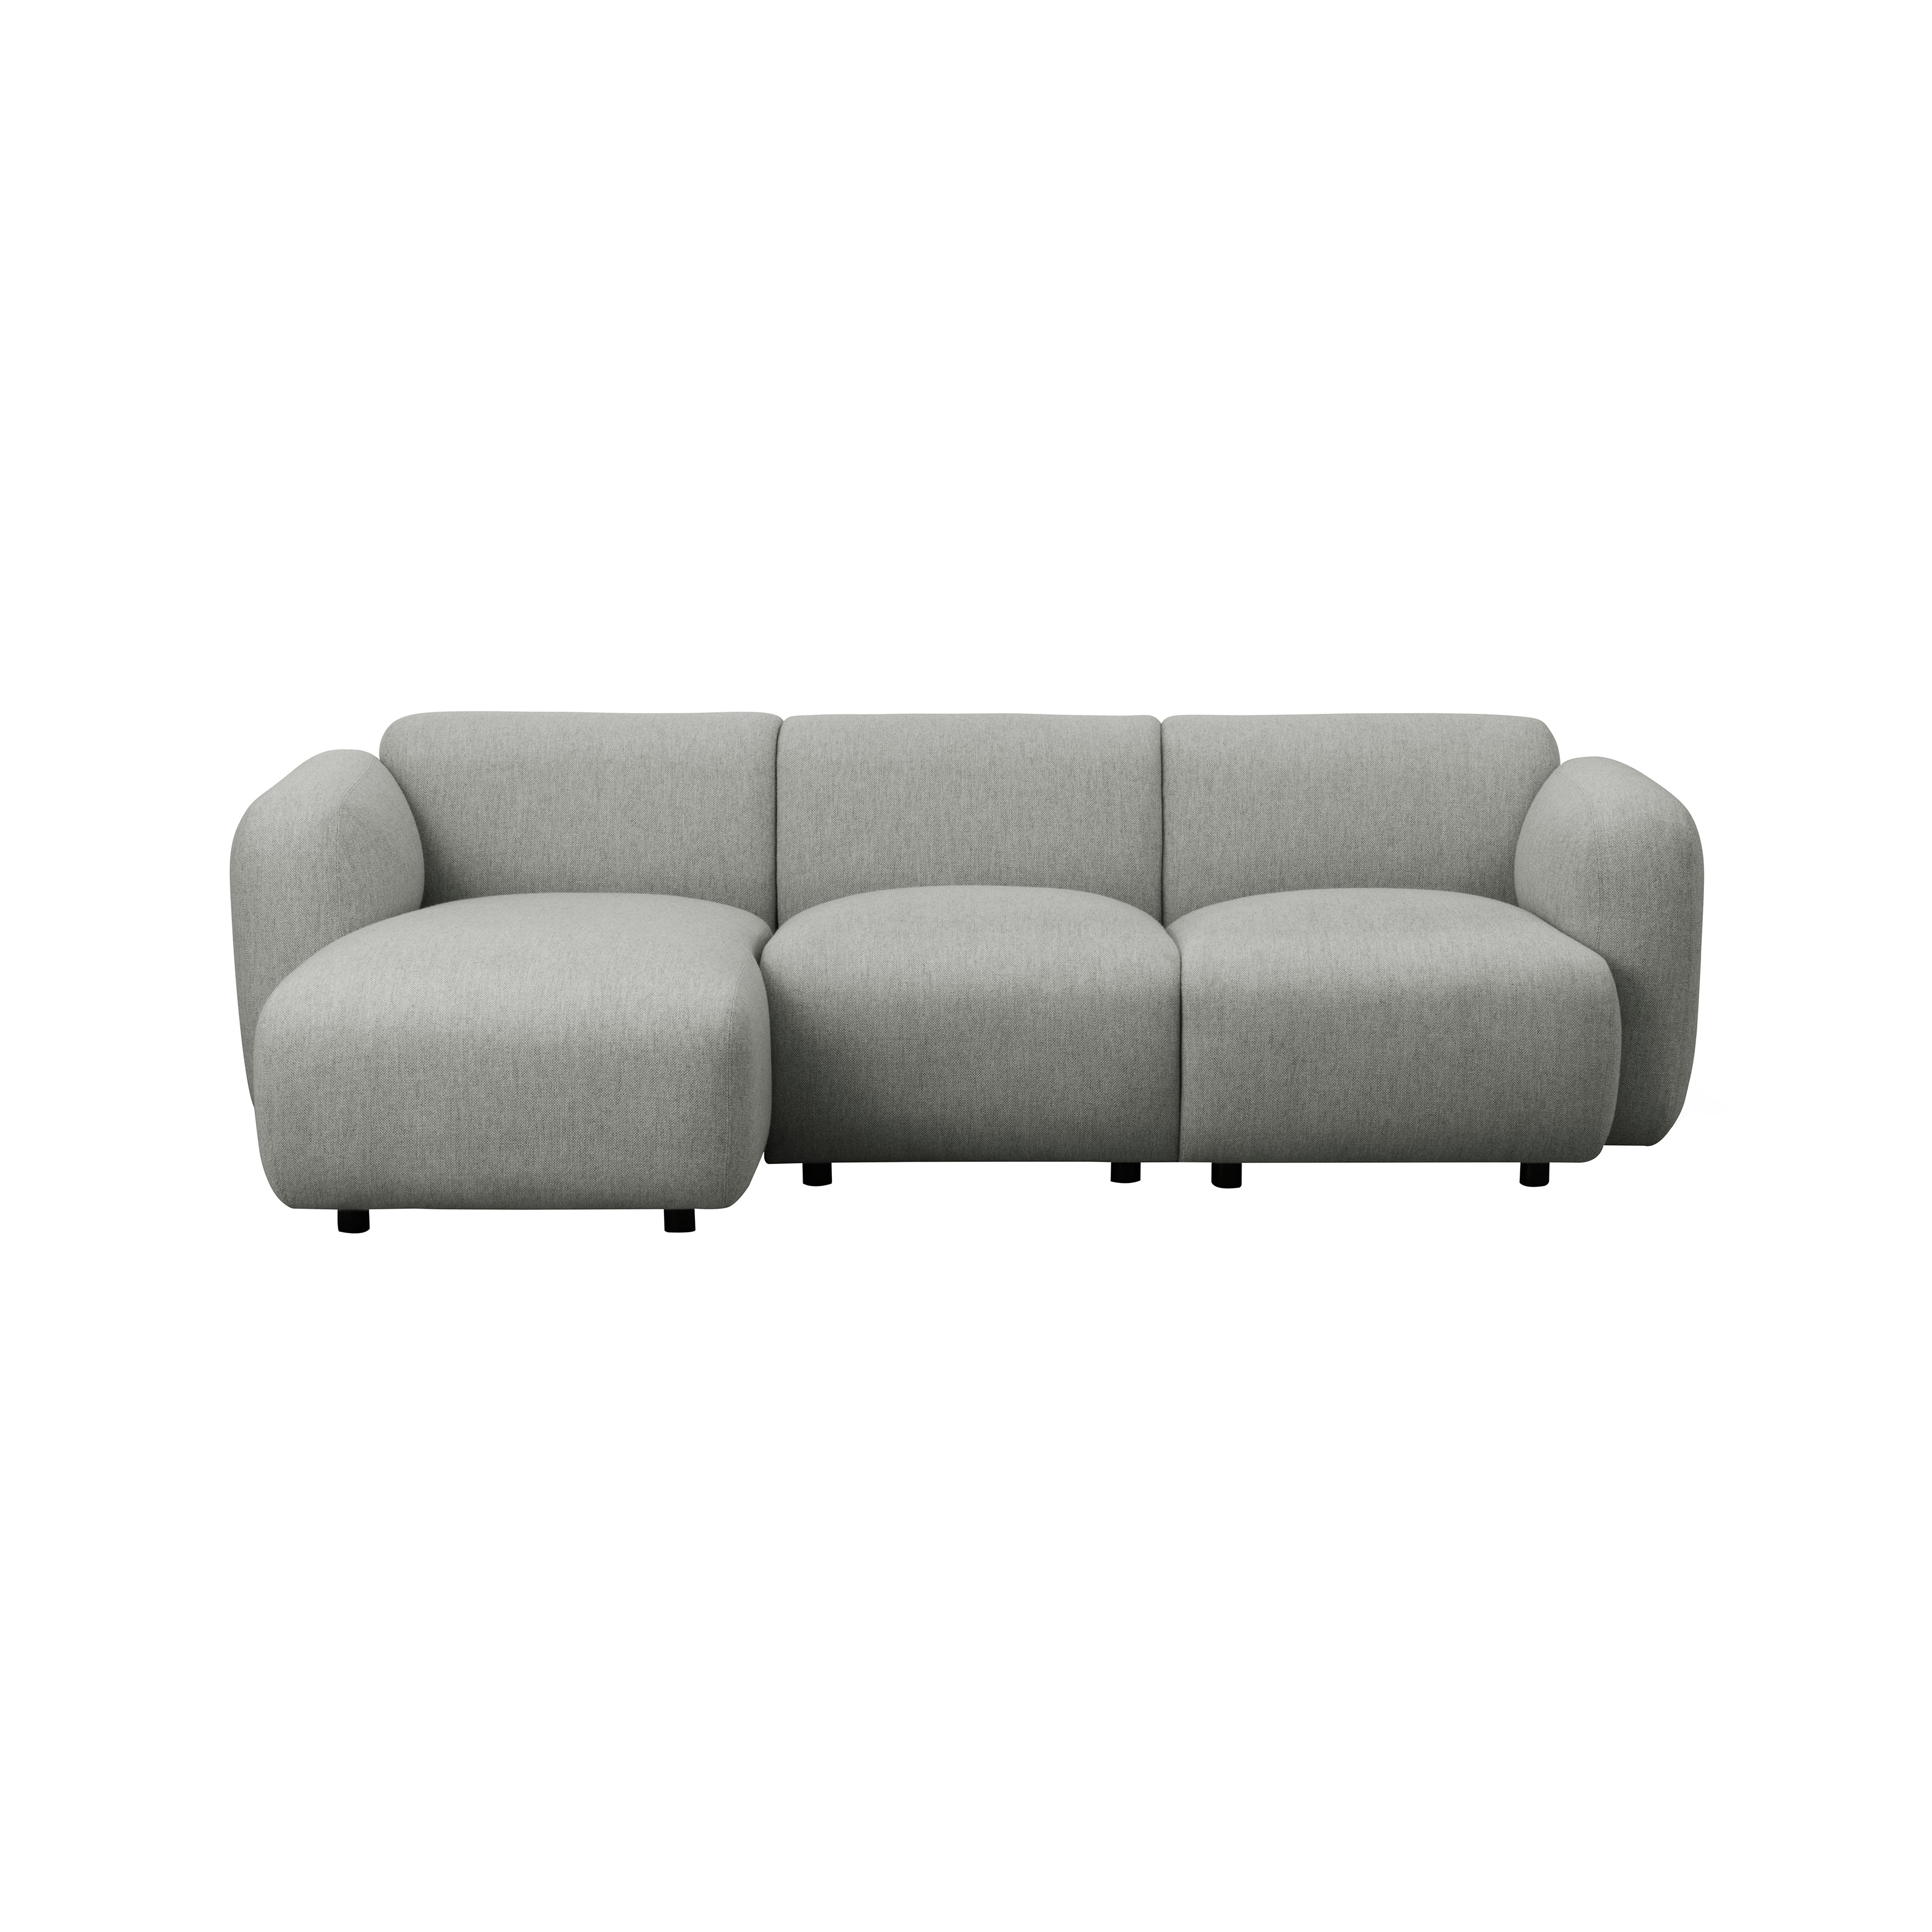 Swell Modular 2 Seater Sofa: Configuration 1